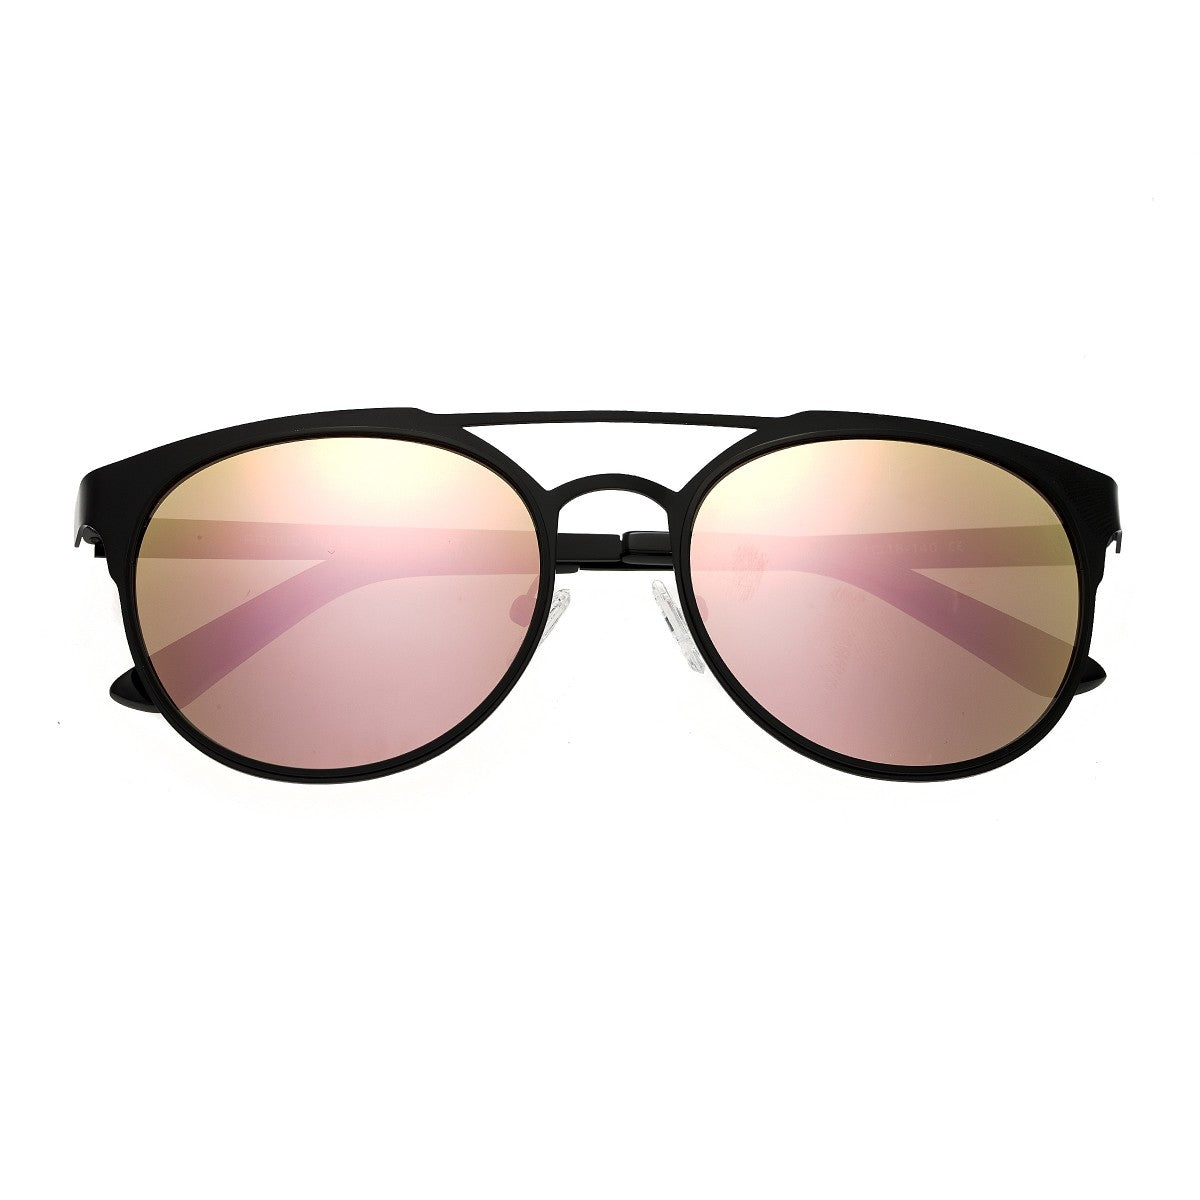 Breed Mensa Titanium Polarized Sunglasses - Black/Rose Gold - BSG037BK